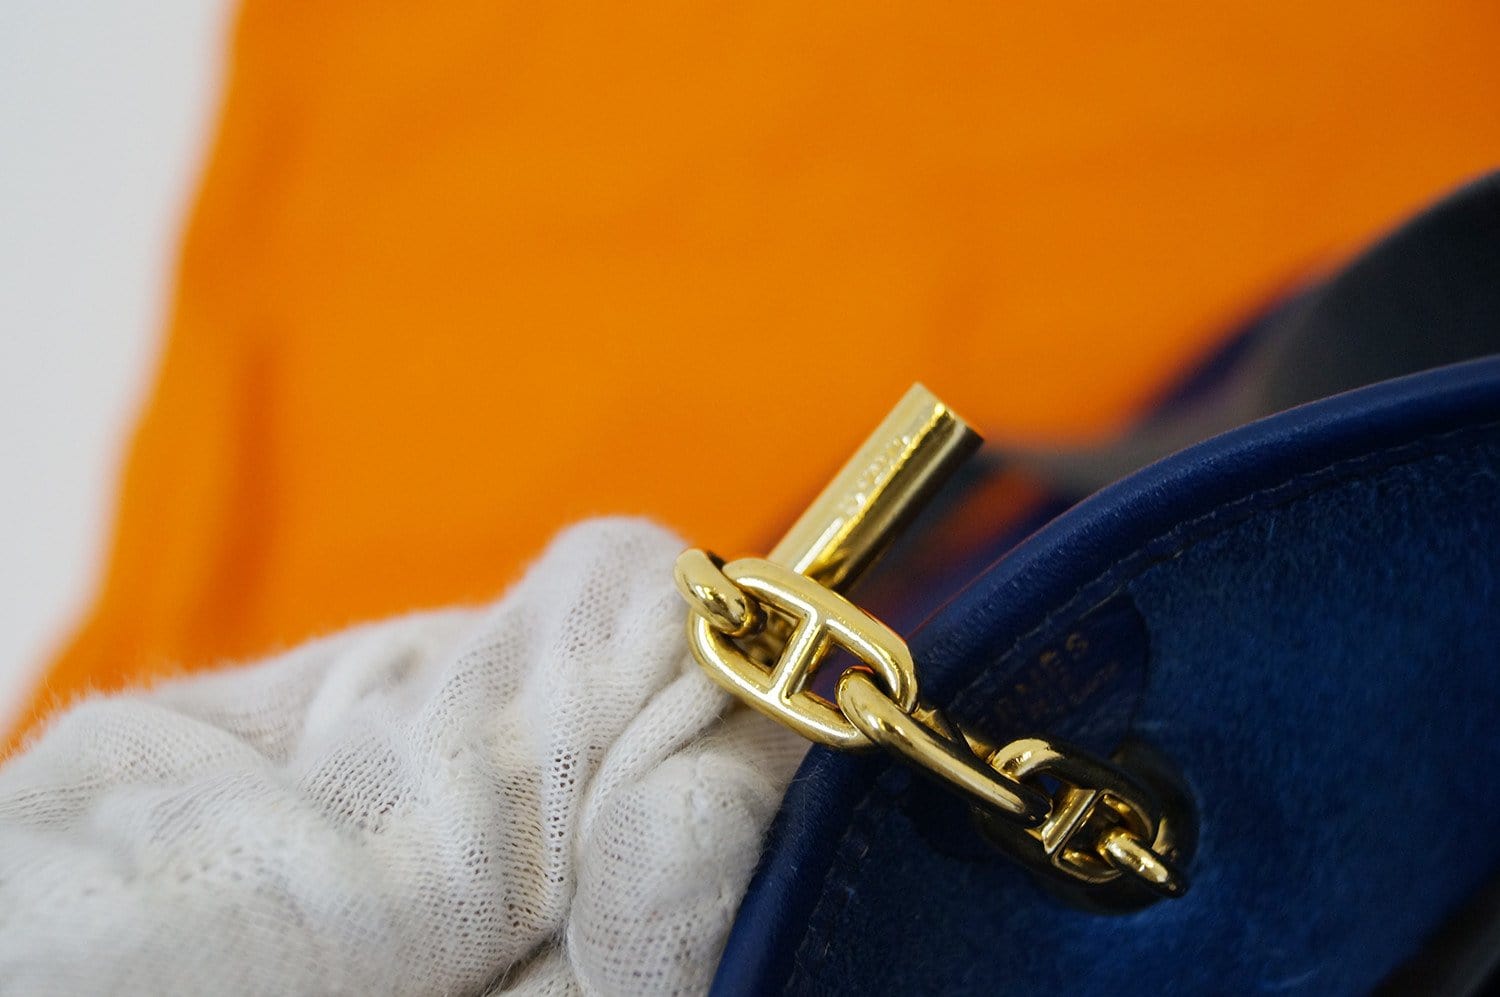 At Auction: Hermes - Yellow Leather Vespa PM Shoulder Bag